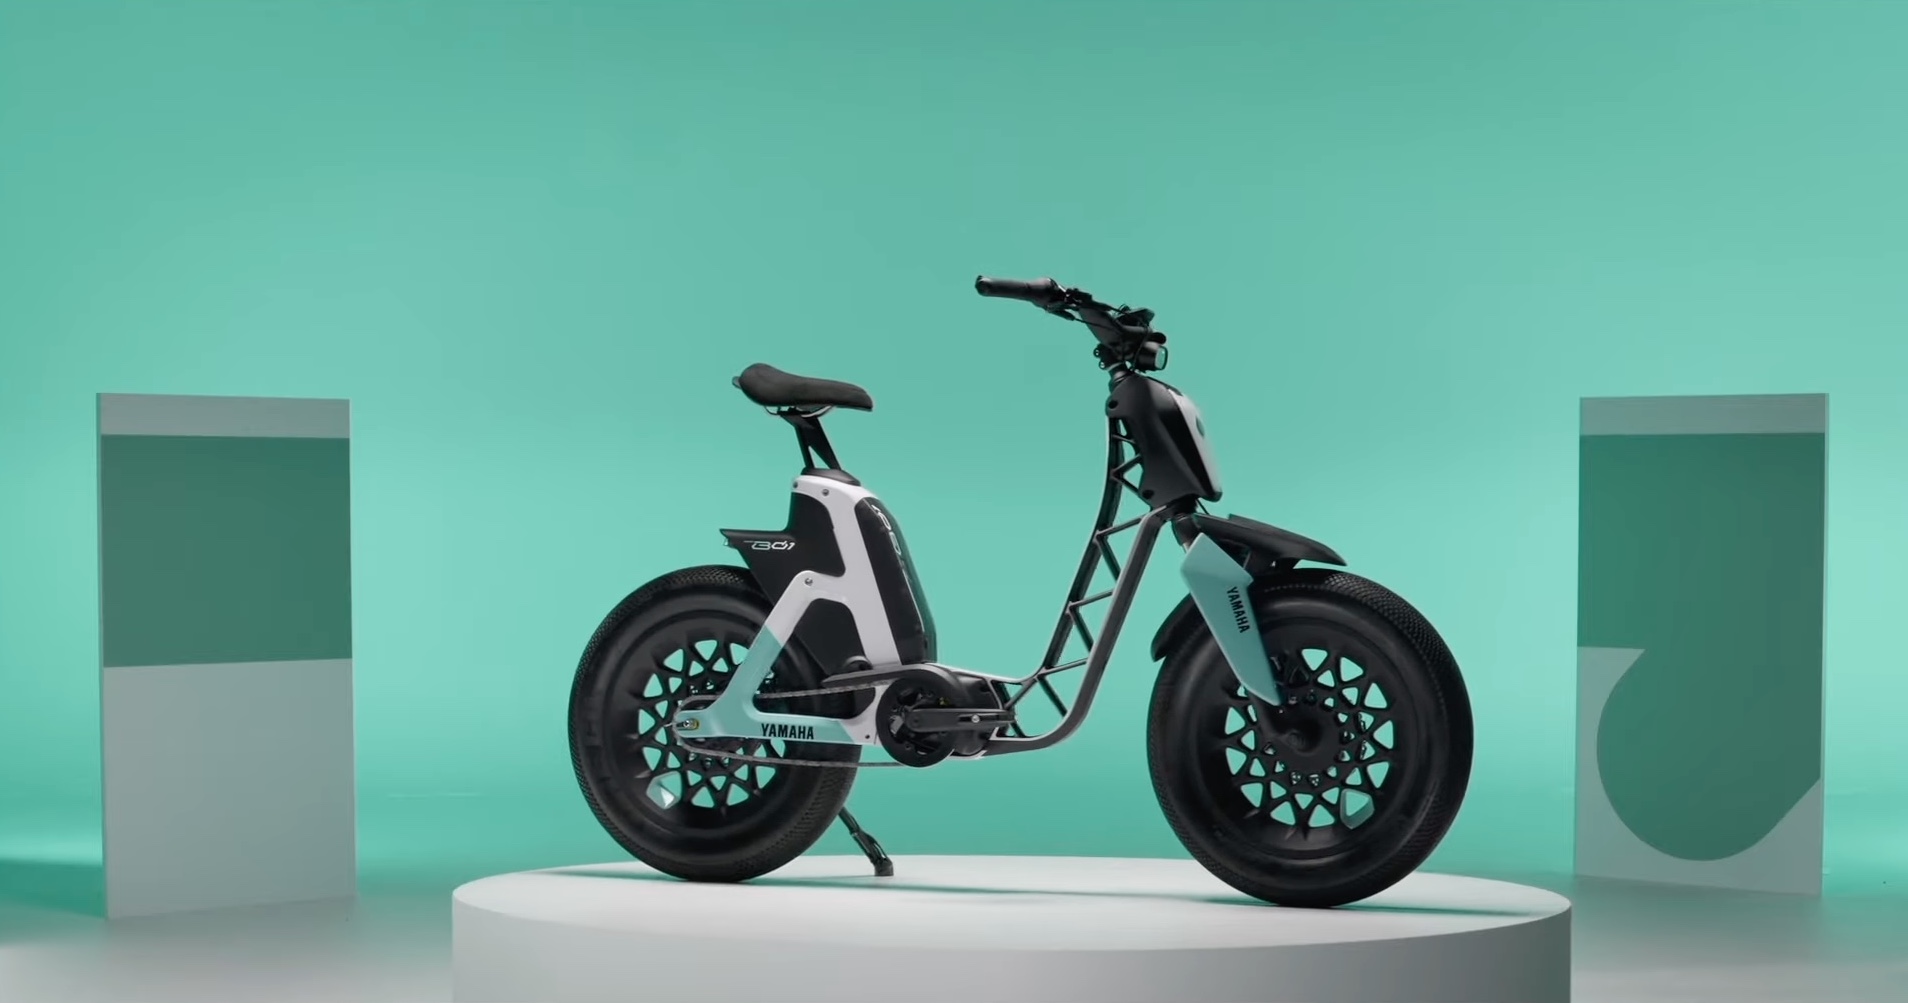 Yamaha unveils fresh-looking new electric moped, plus e-bikes